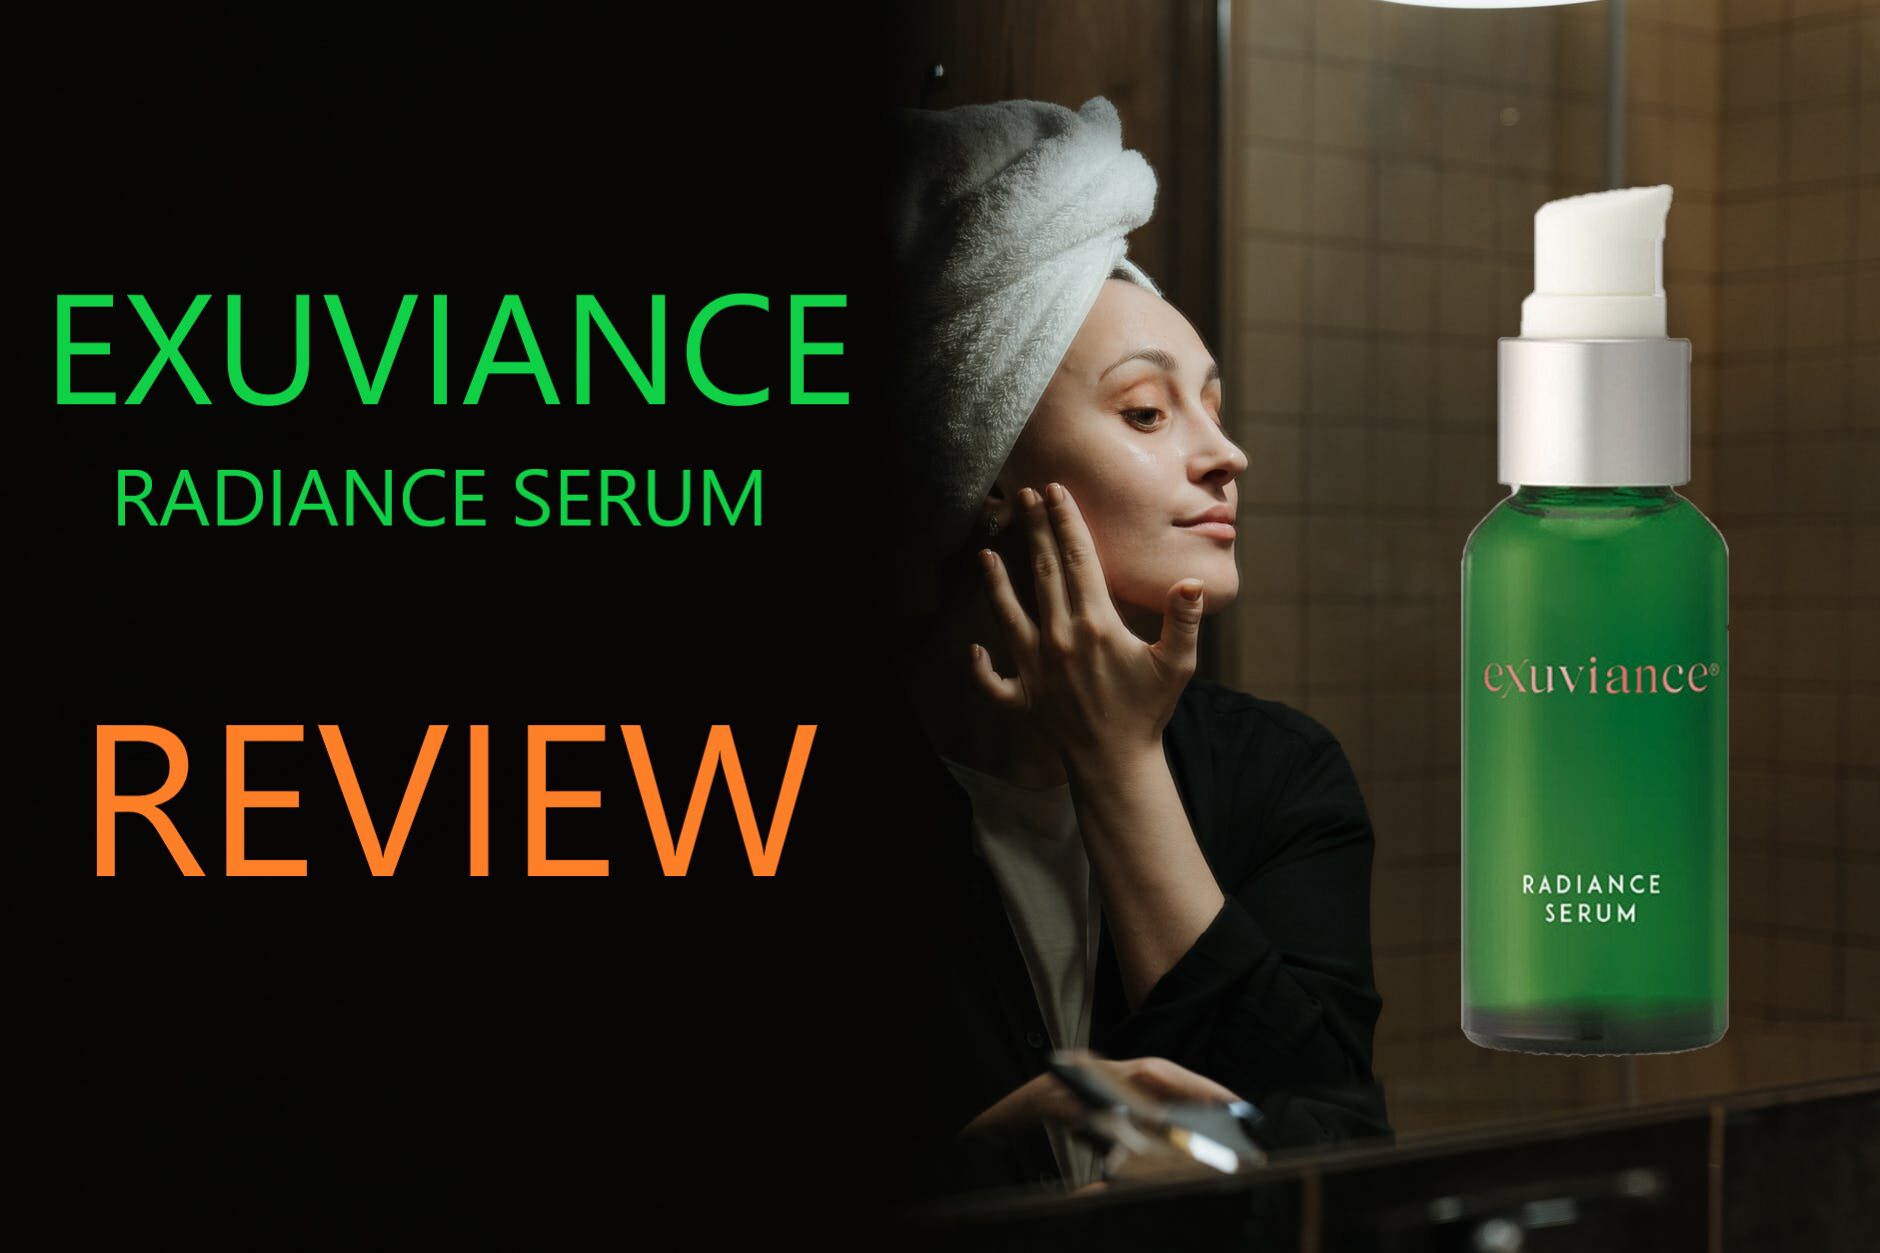 Exuviance radiance serum review